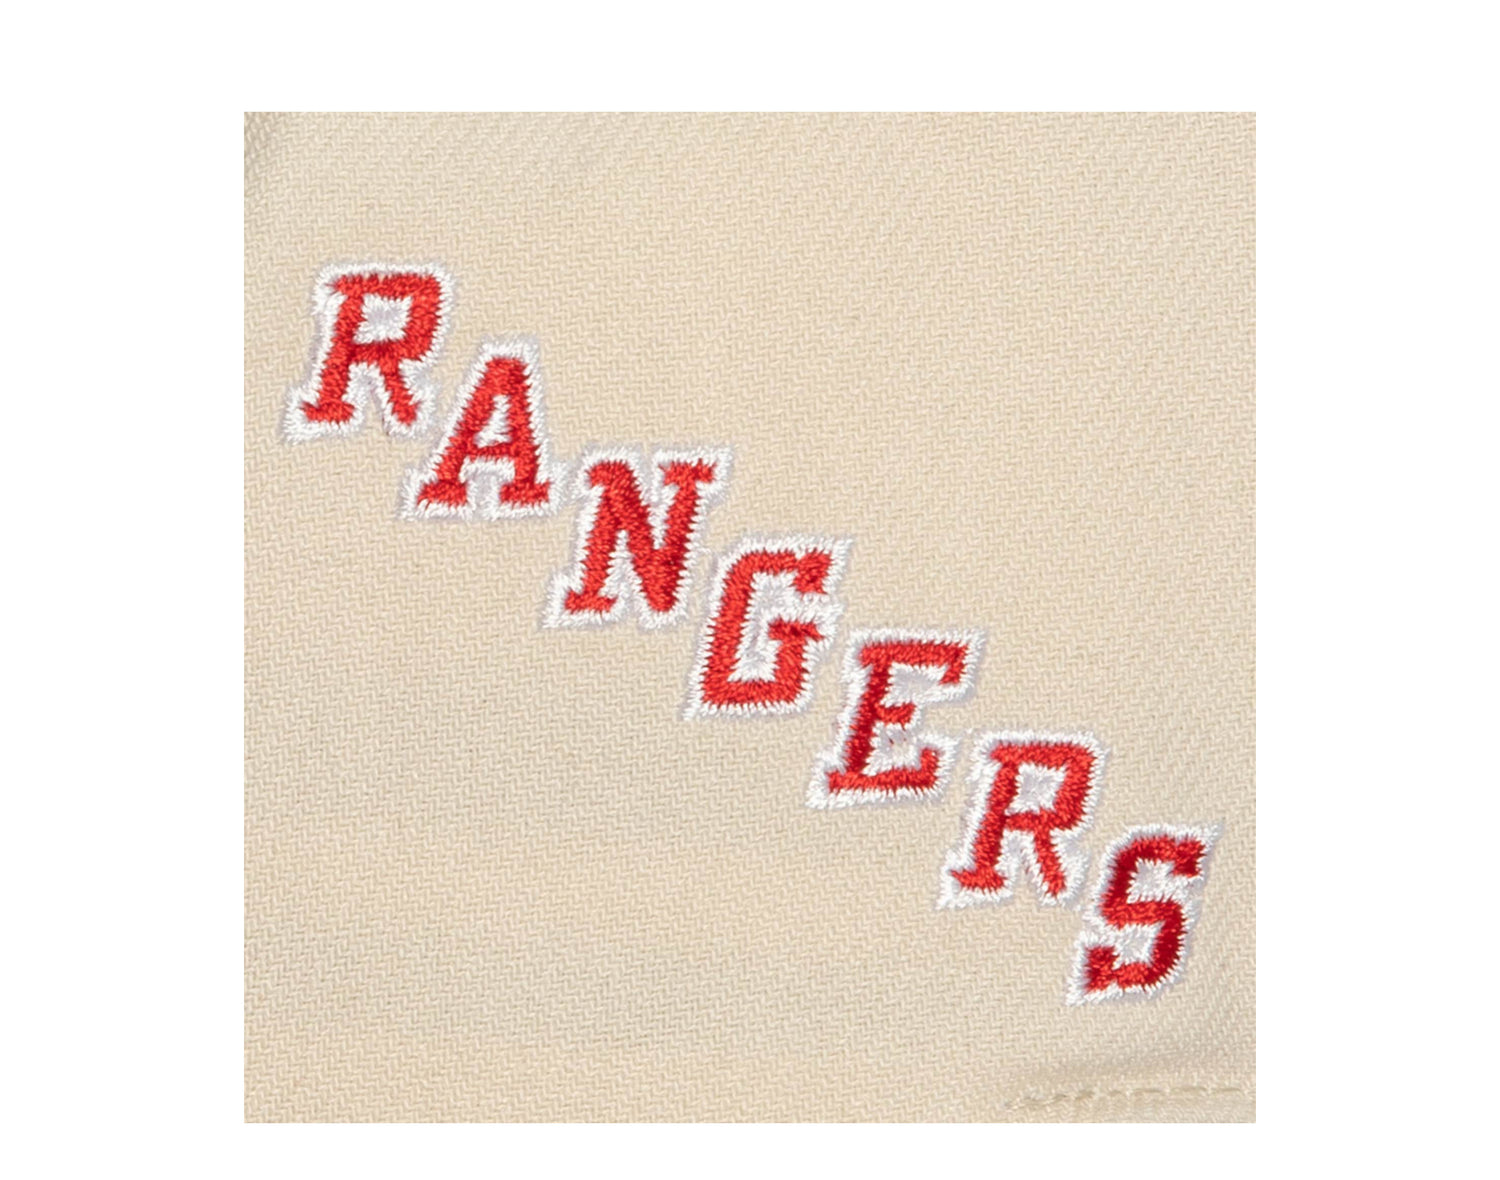 Mitchell & Ness NHL New York Rangers Vintage Cream Snapback Hat